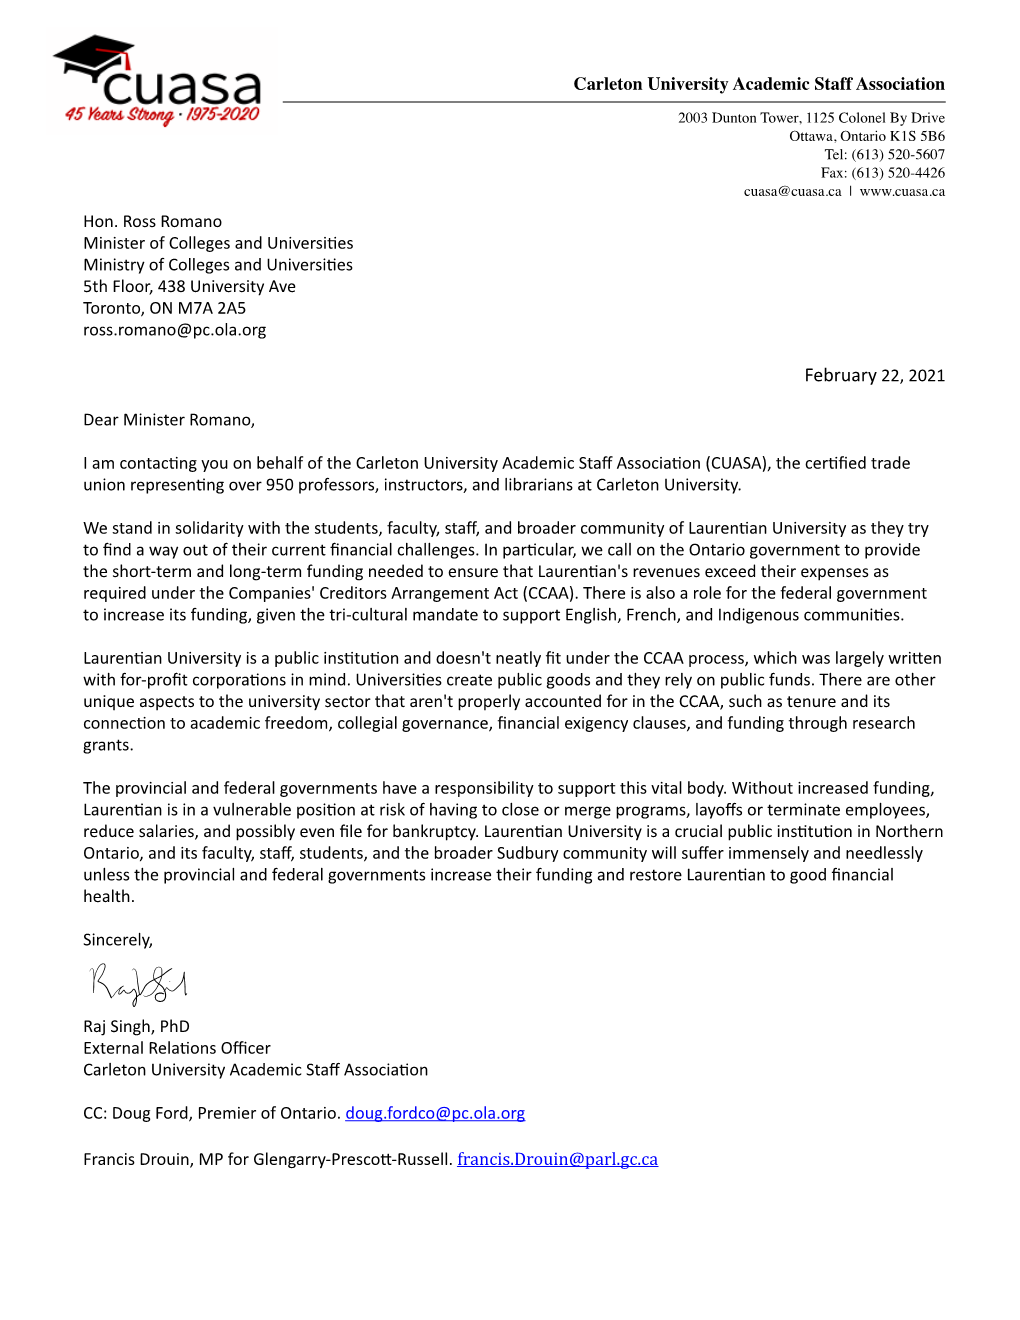 CUASA Letter Re. Laurentian University 22 Feb 2021